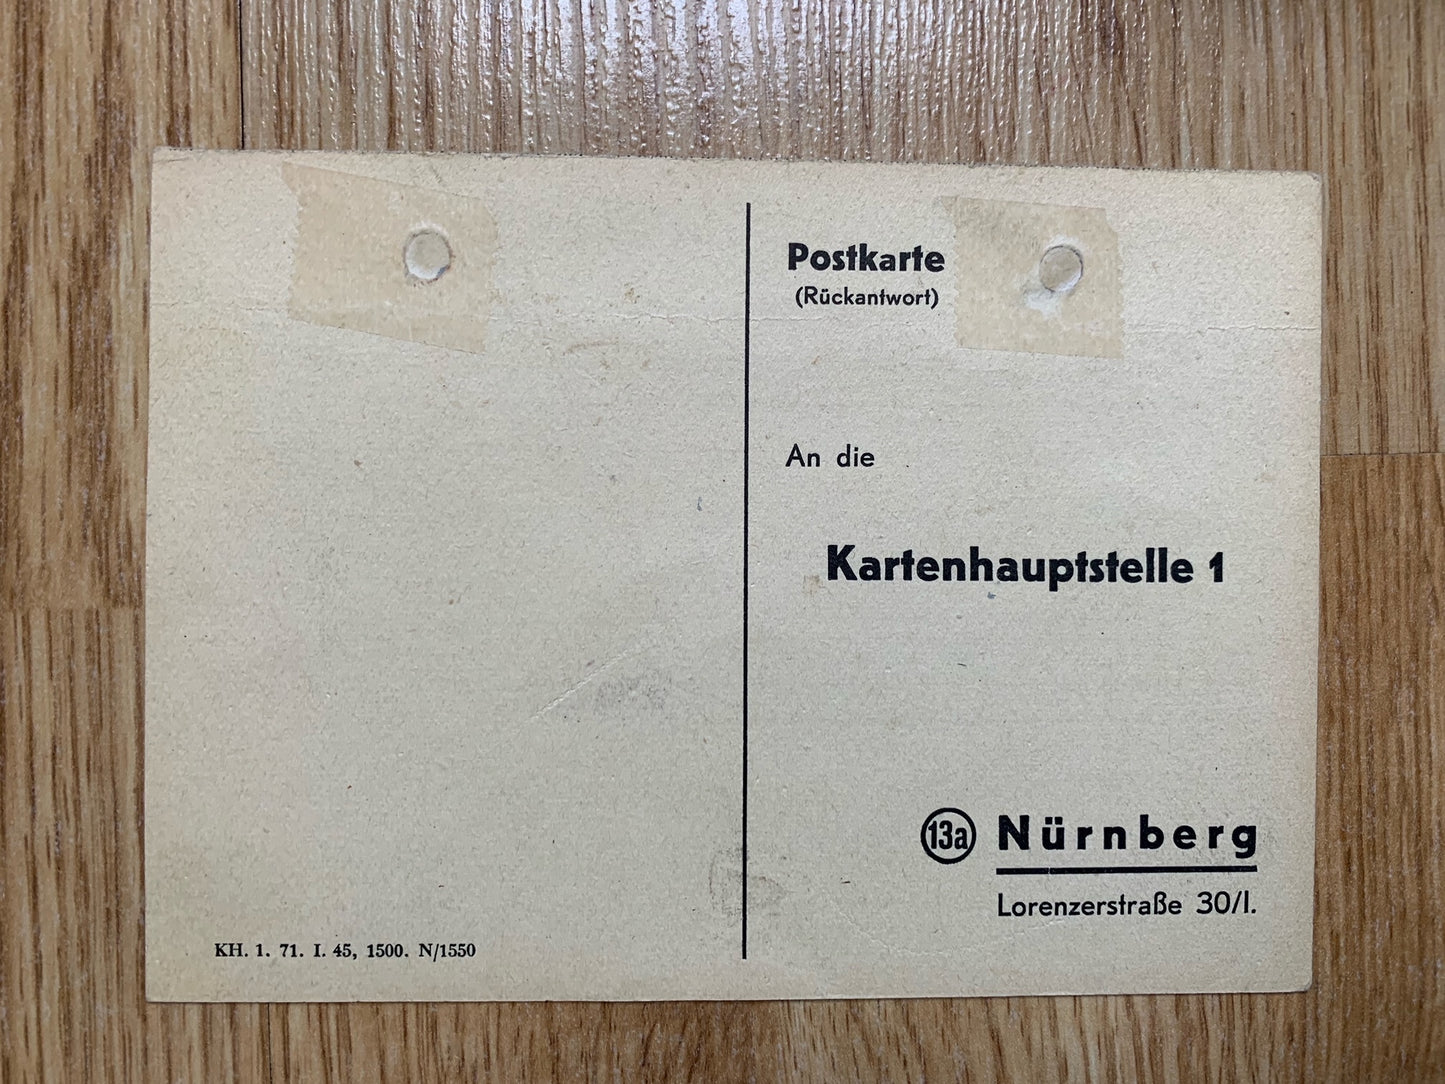 WW2 German ration card distributor postcard